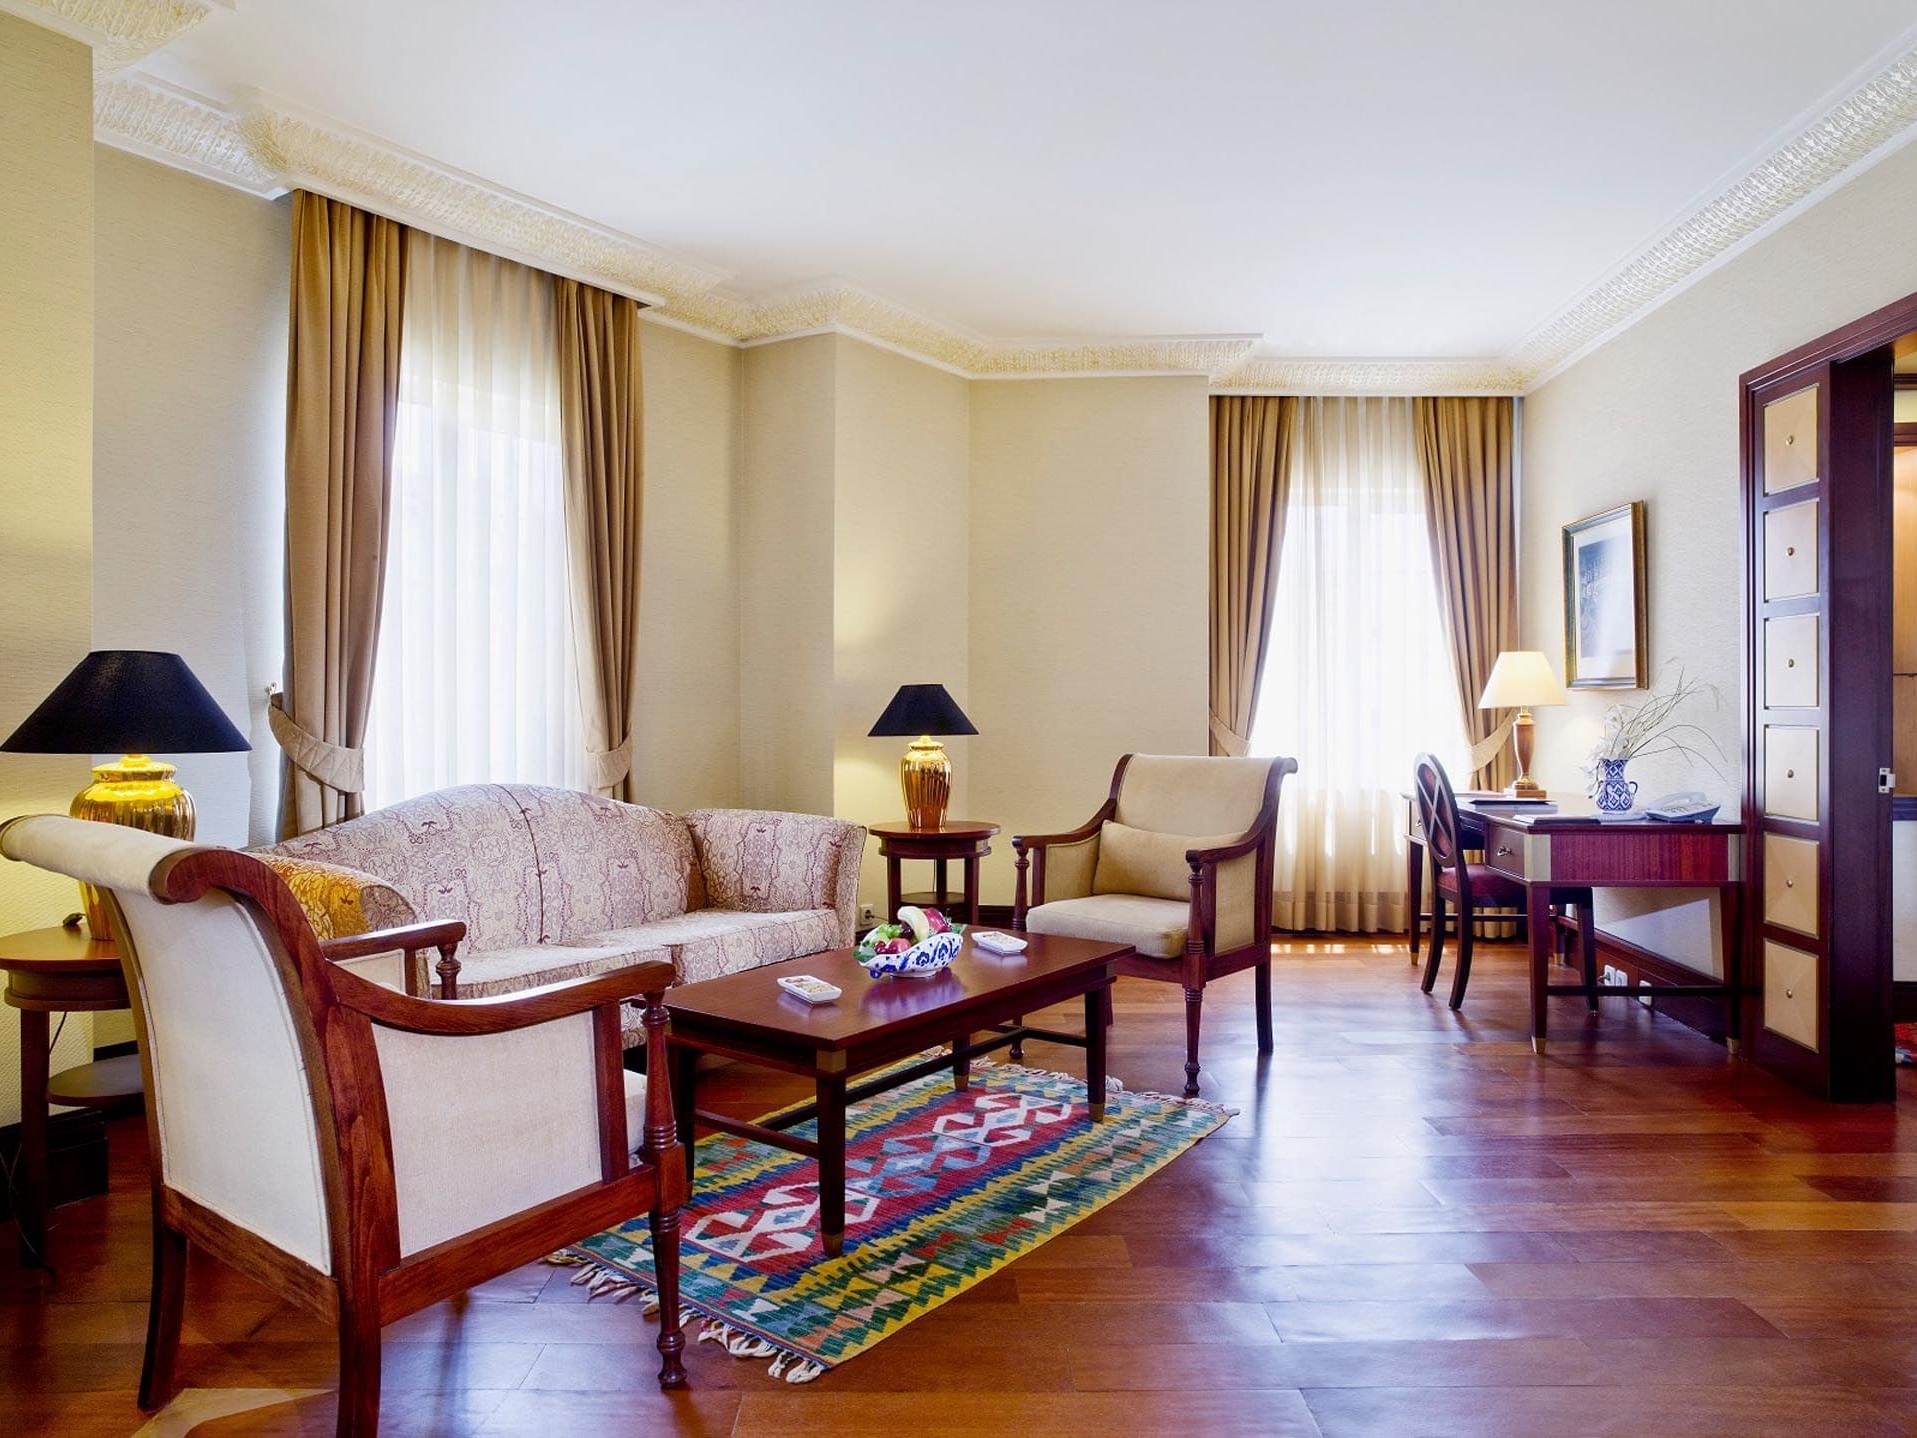 Luxury Family Retreat: Eresin Sultanahmet. Family Suite, spa bath, separate living area, enjoy family time. 